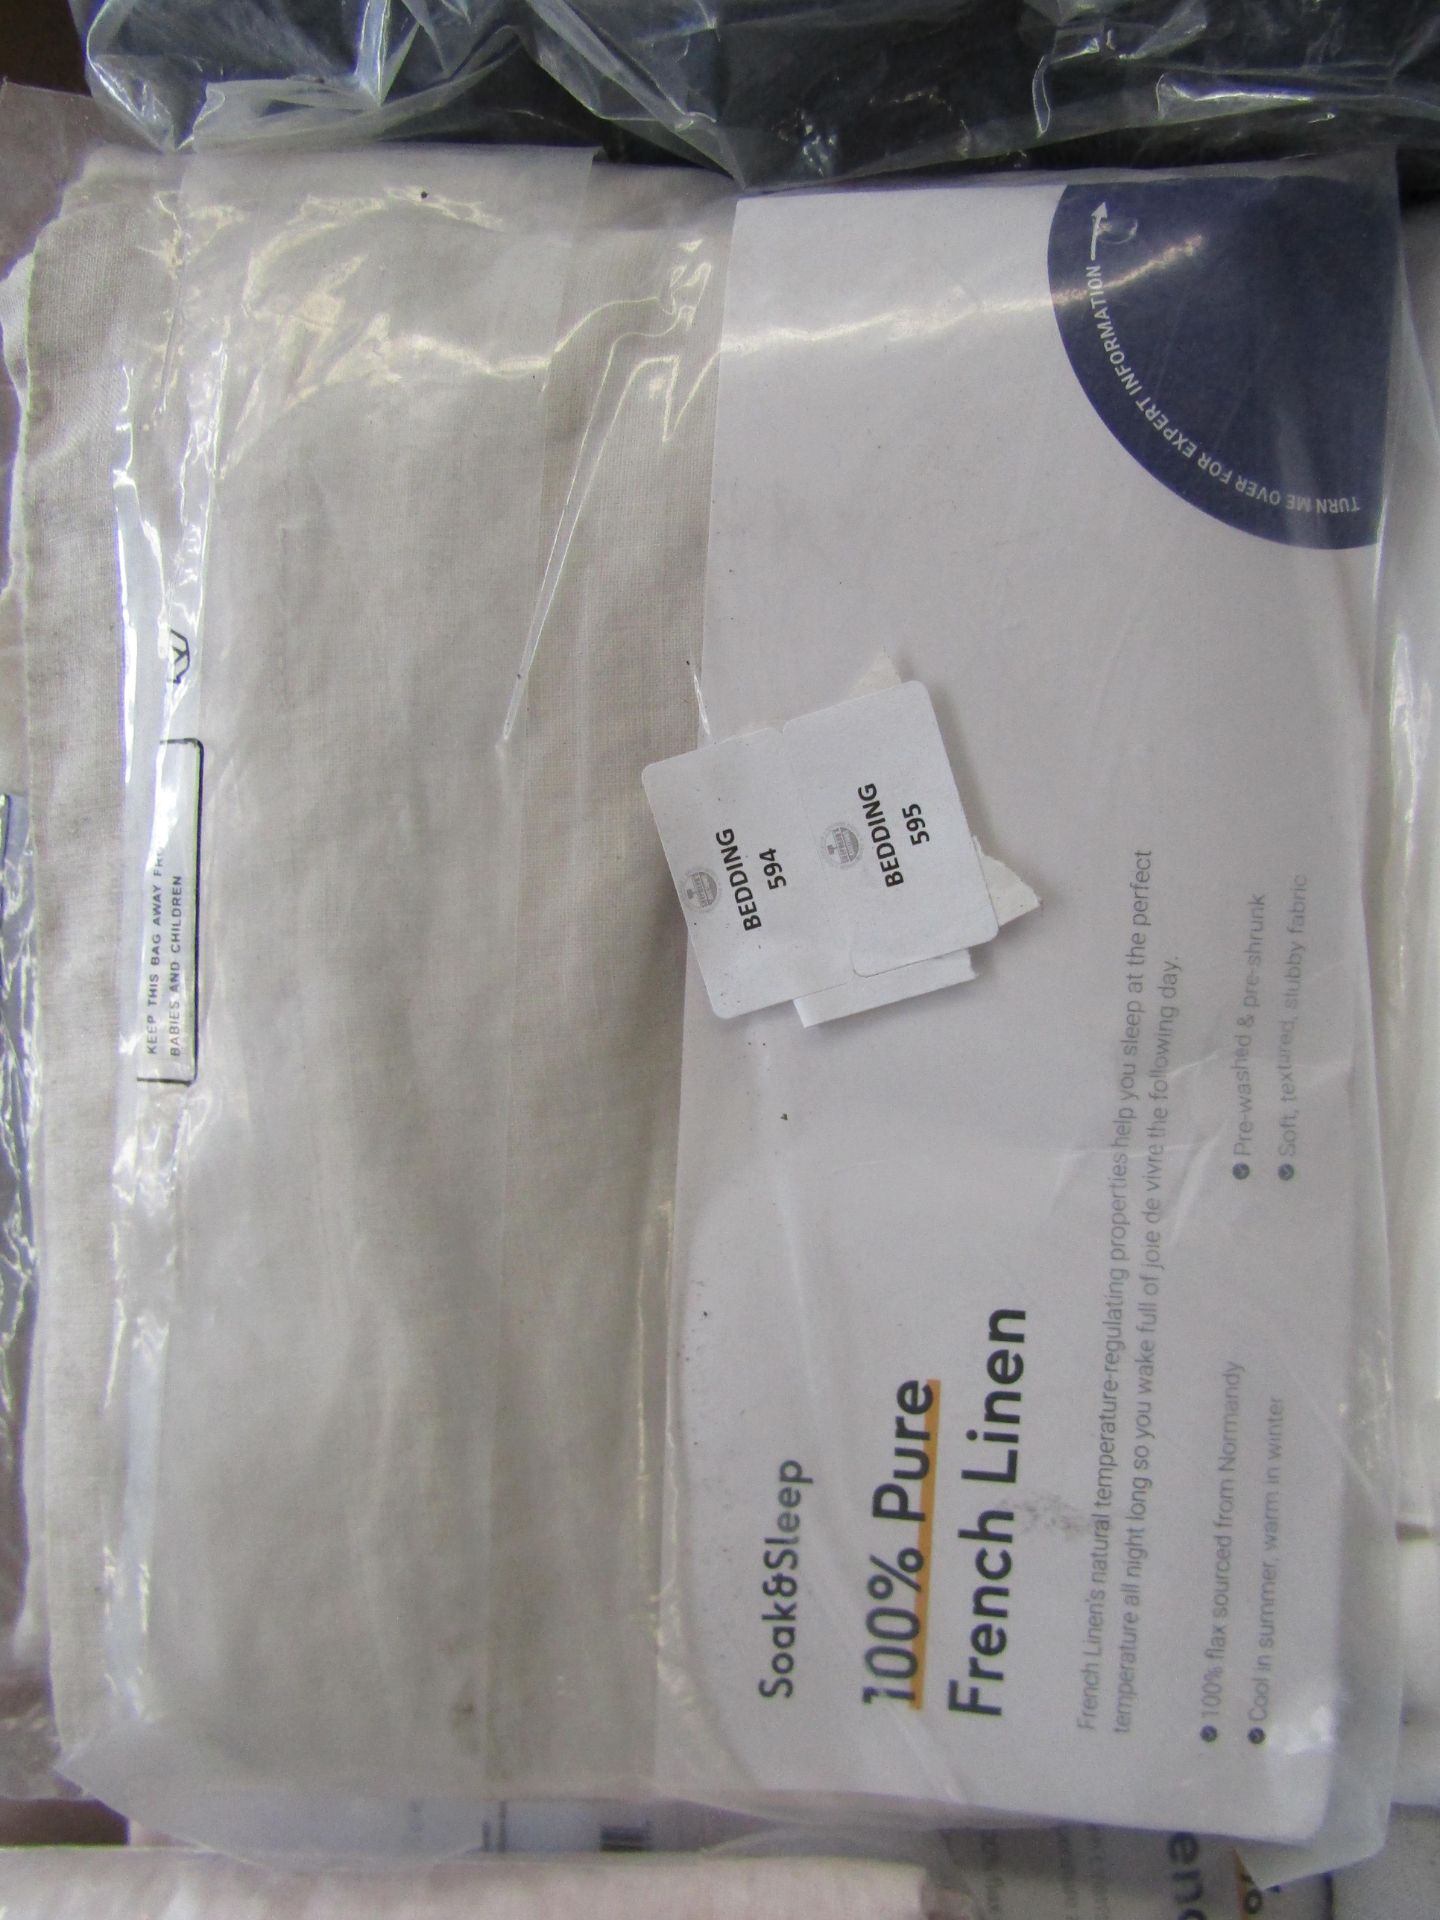 Soak & Sleep Soak & Sleep Natural French Linen Standard Oxford Pillowcase Pair RRP 17 - Image 2 of 2